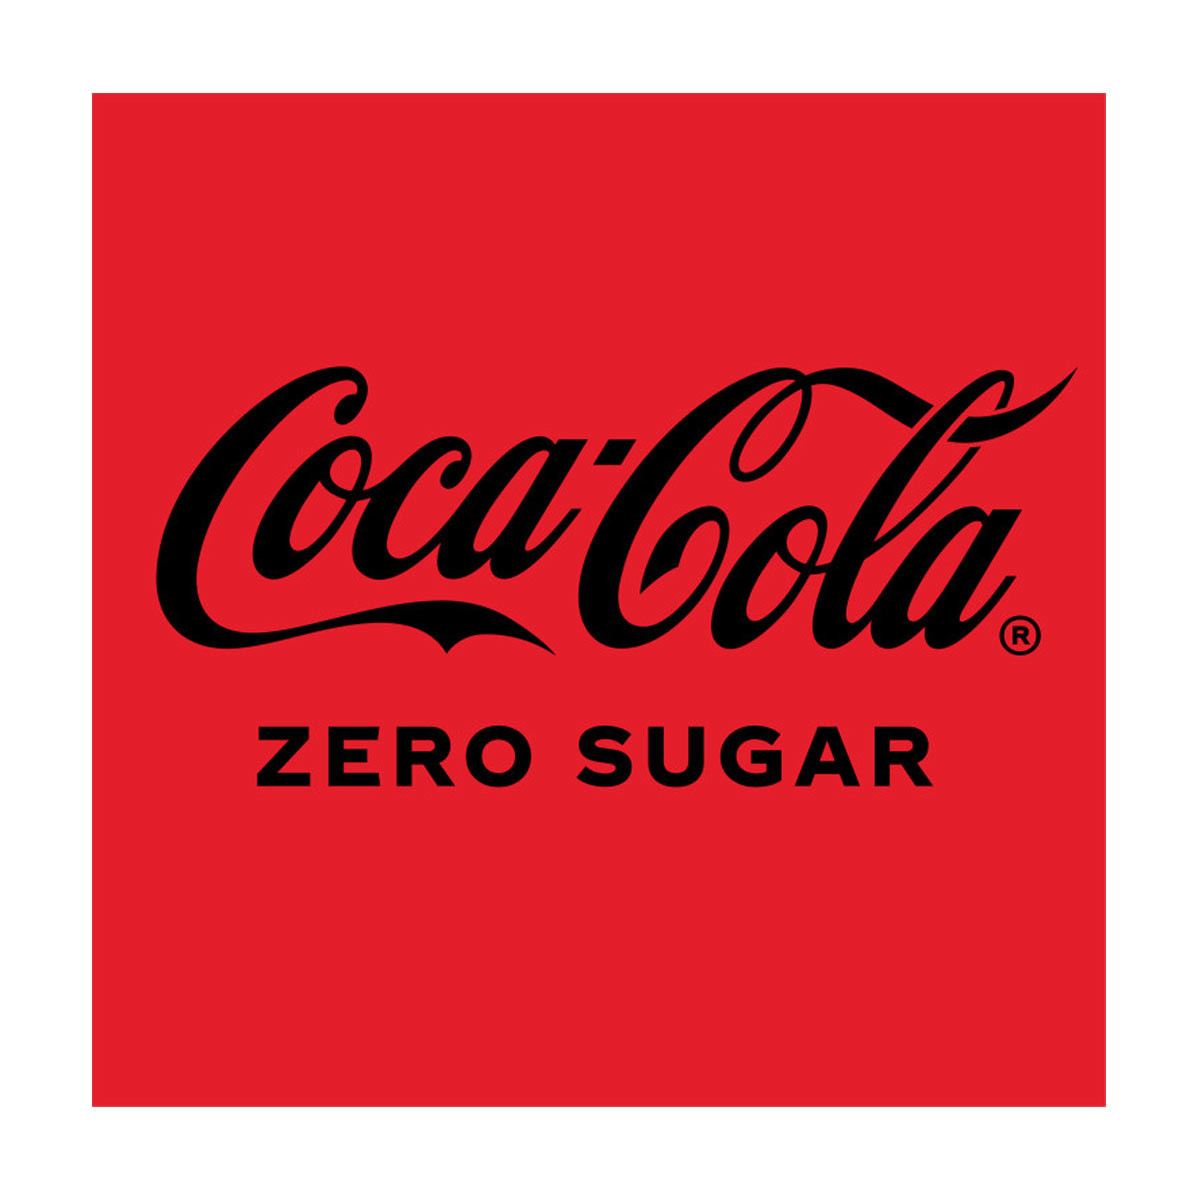 Coca-Cola Zero Sugar Soda Pop, 16.9 fl oz, 6 Pack Cans 